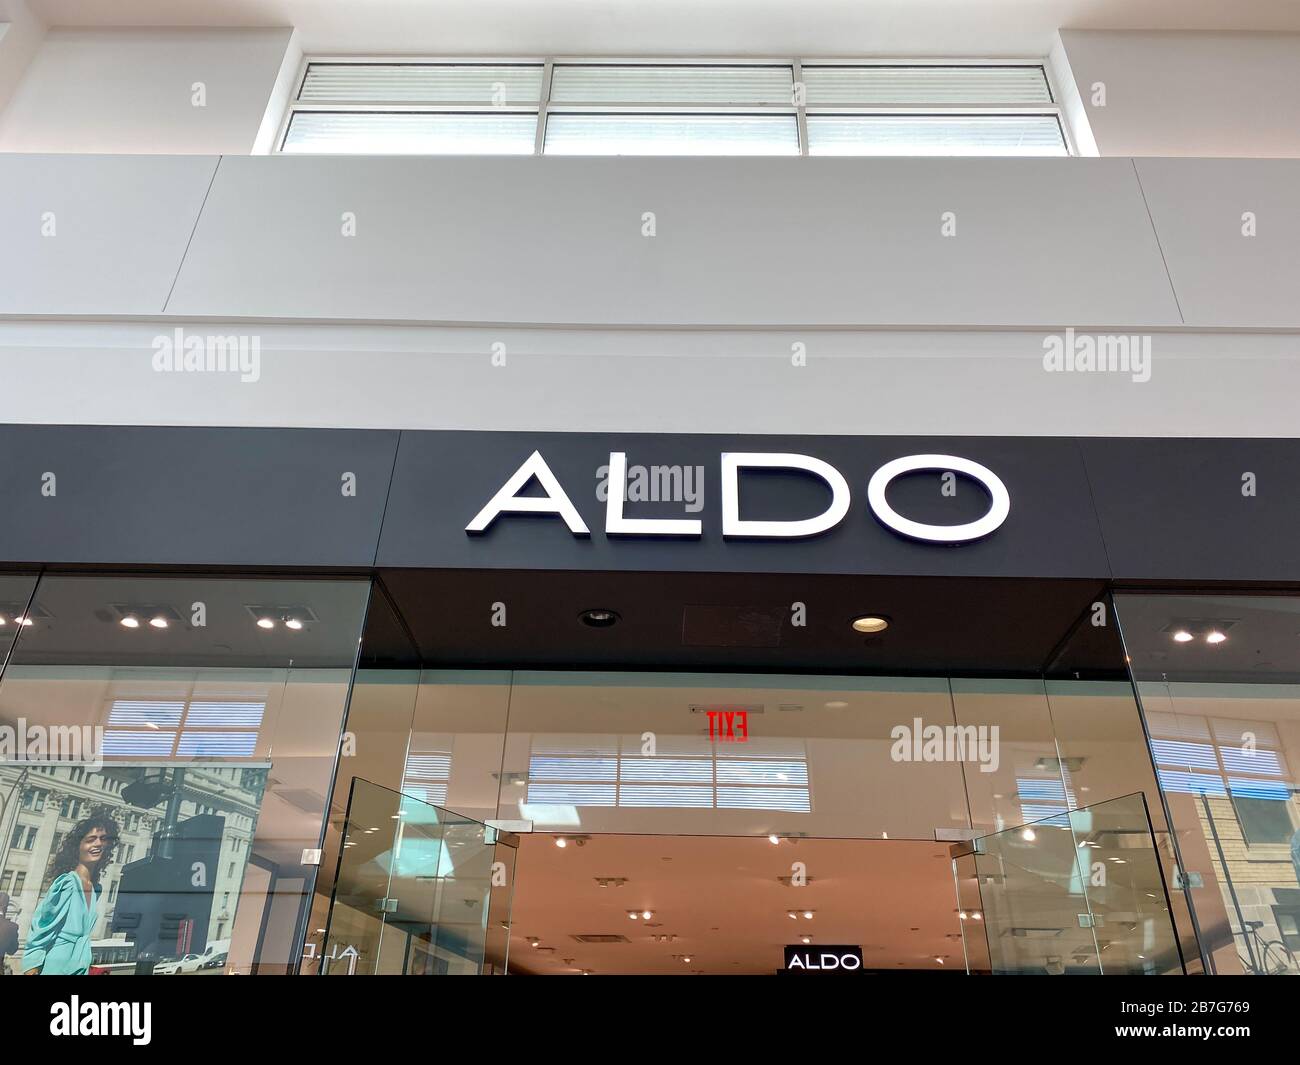 Orlando, FL/USA-2/17/20: An Aldo retail fashion shoes and accessories ...